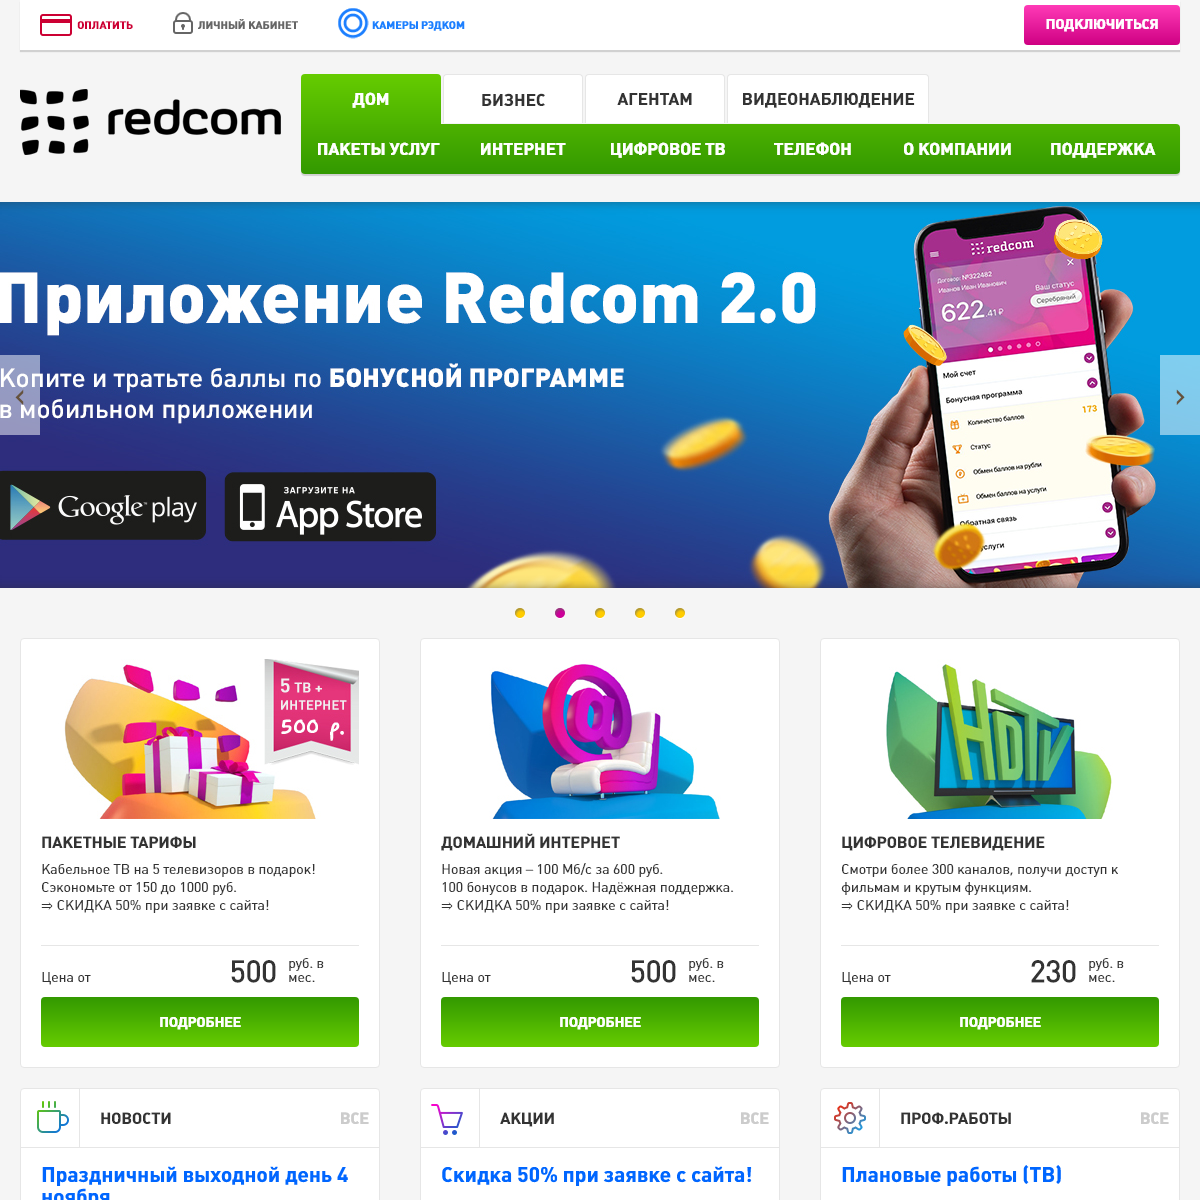 A complete backup of redcom.ru